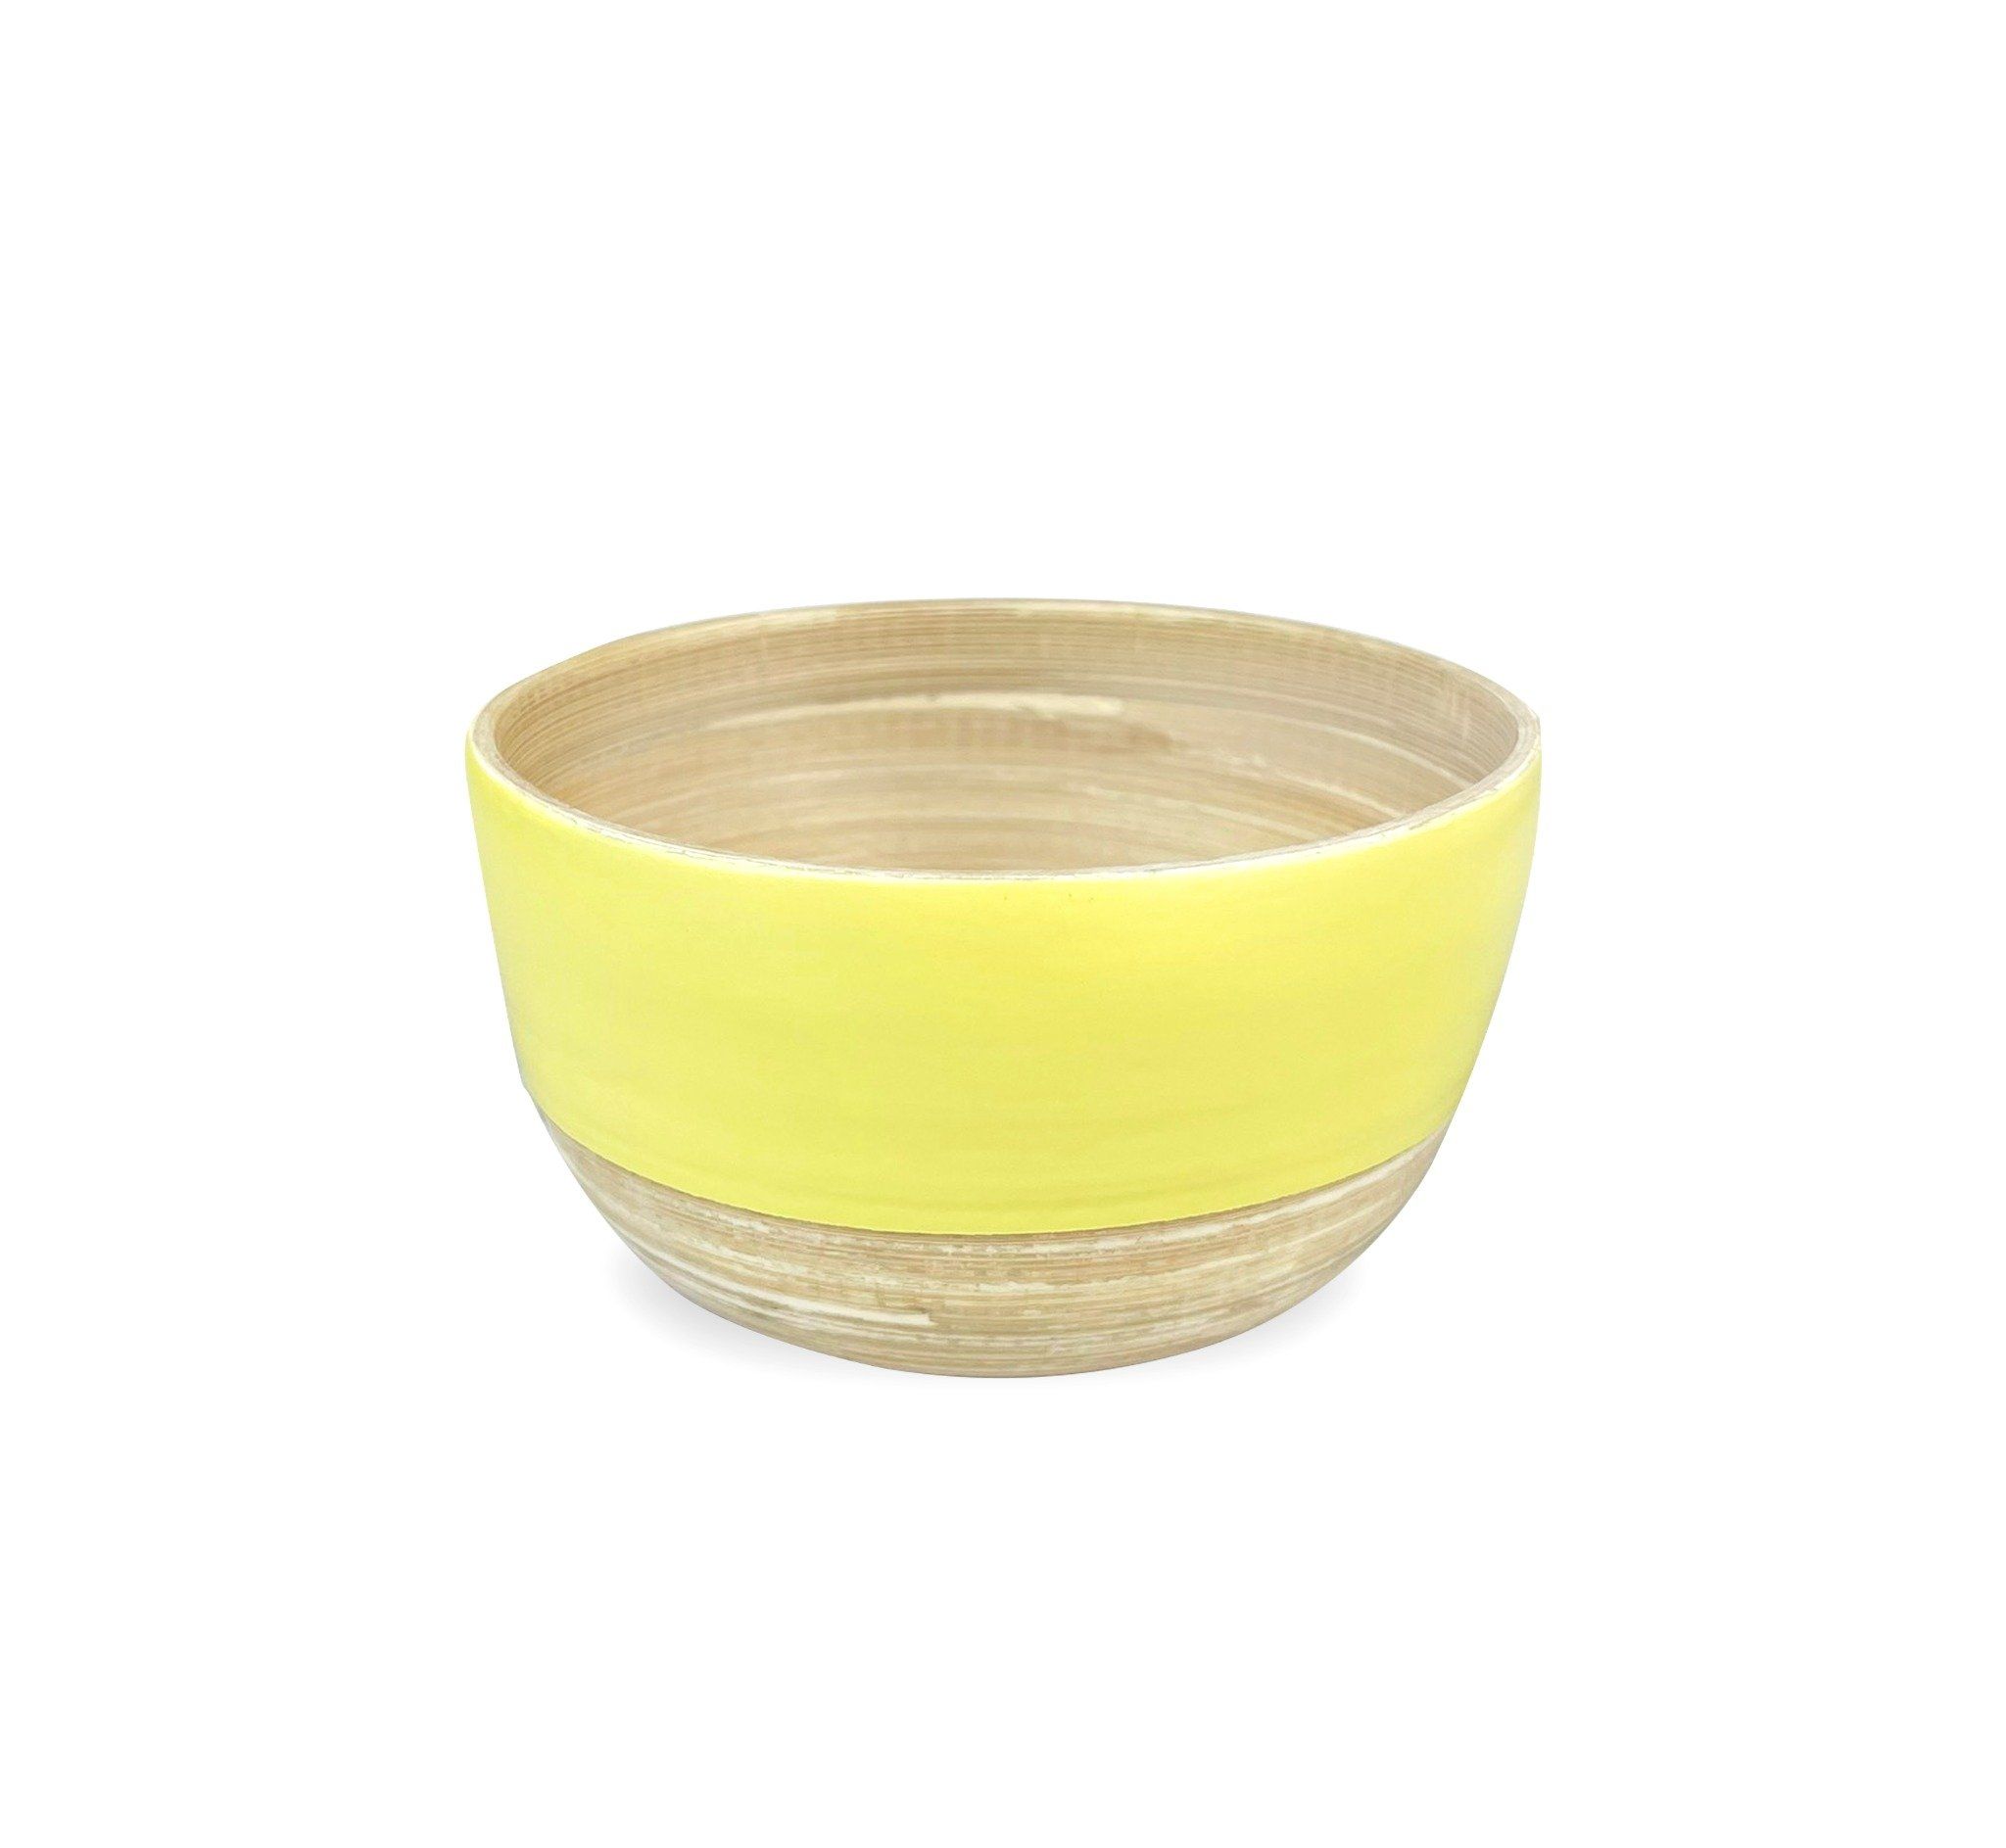  ITM - Bamboo Bowl Yellow 